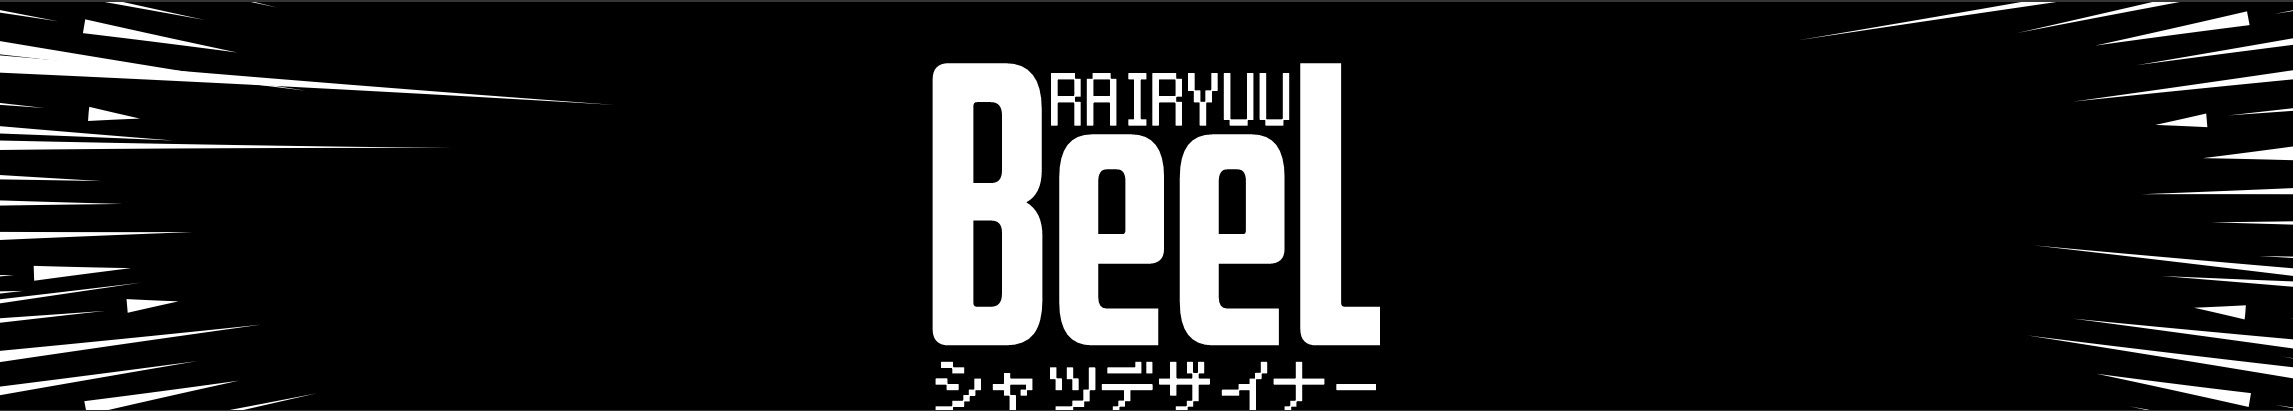 Rairyuu Bell's profile banner